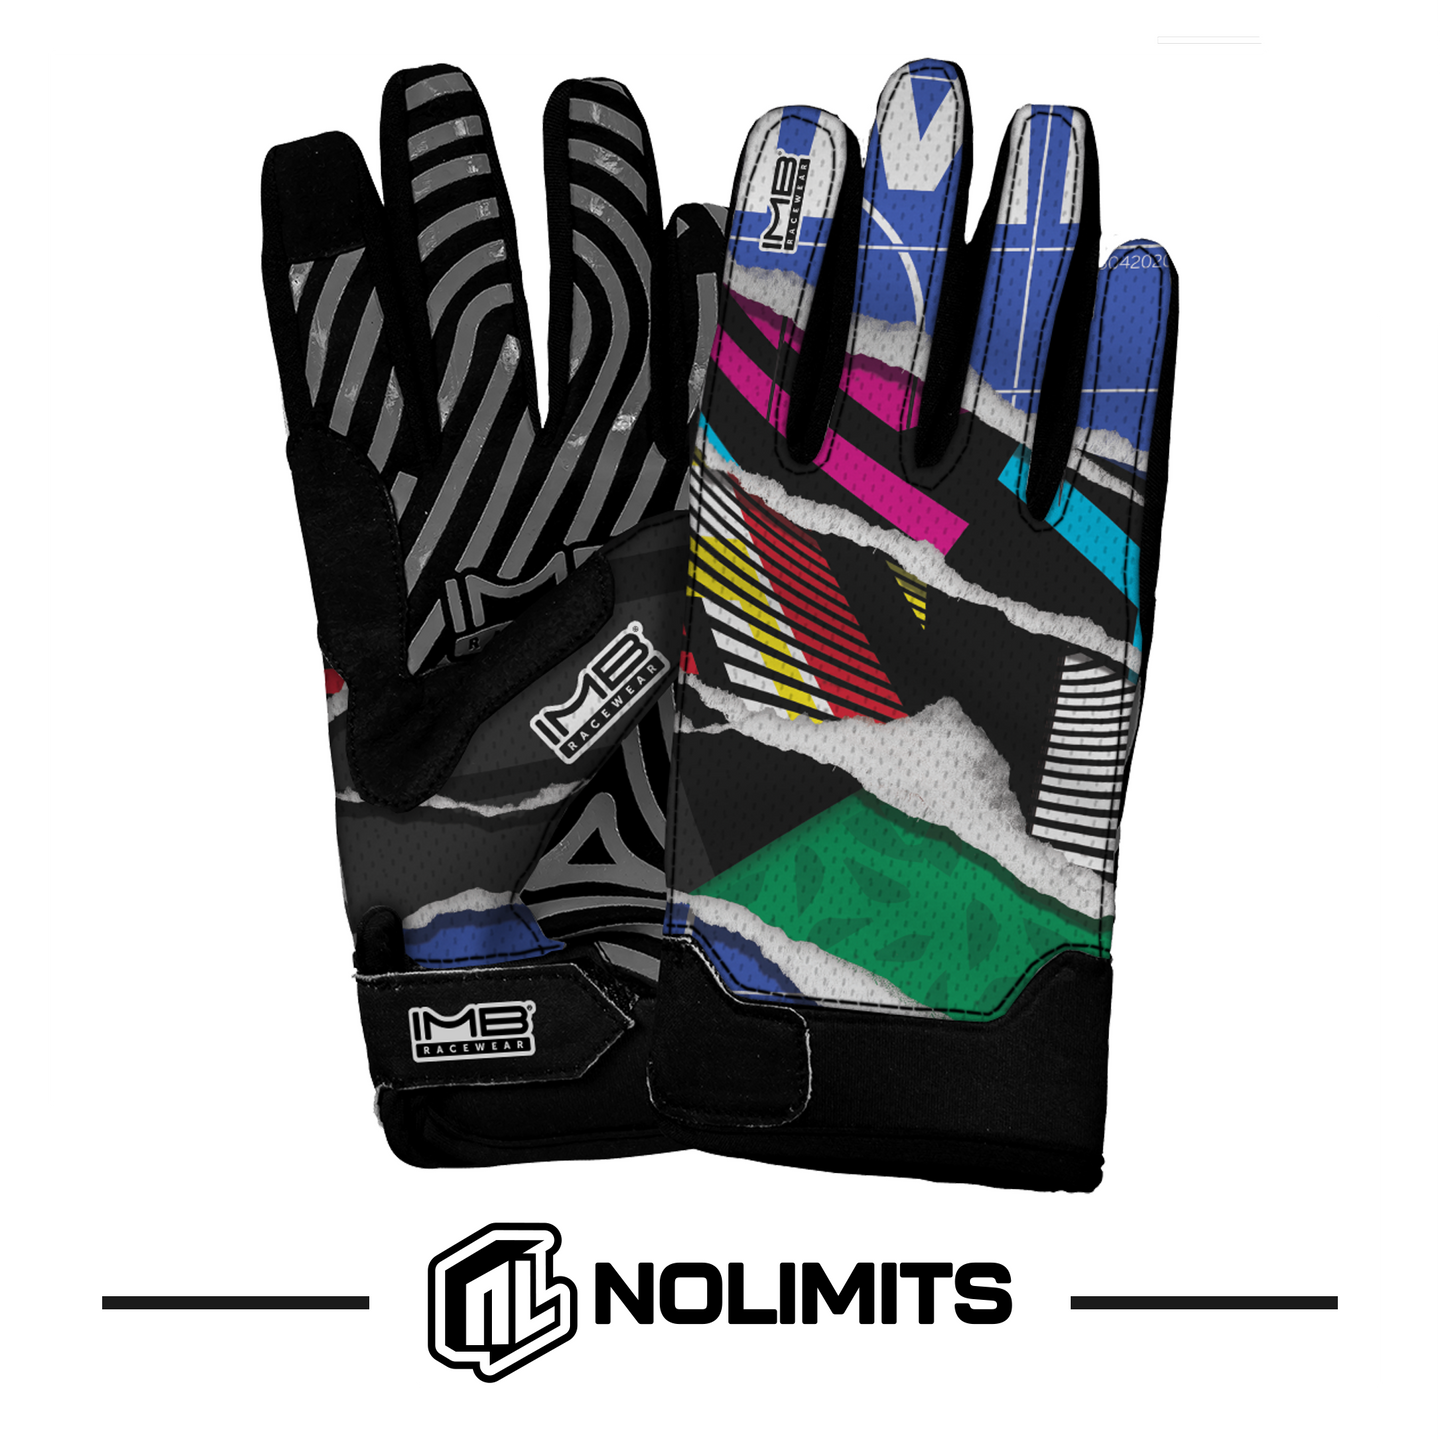 The NoLimits SSGE-2 Short Sim Racing Gloves